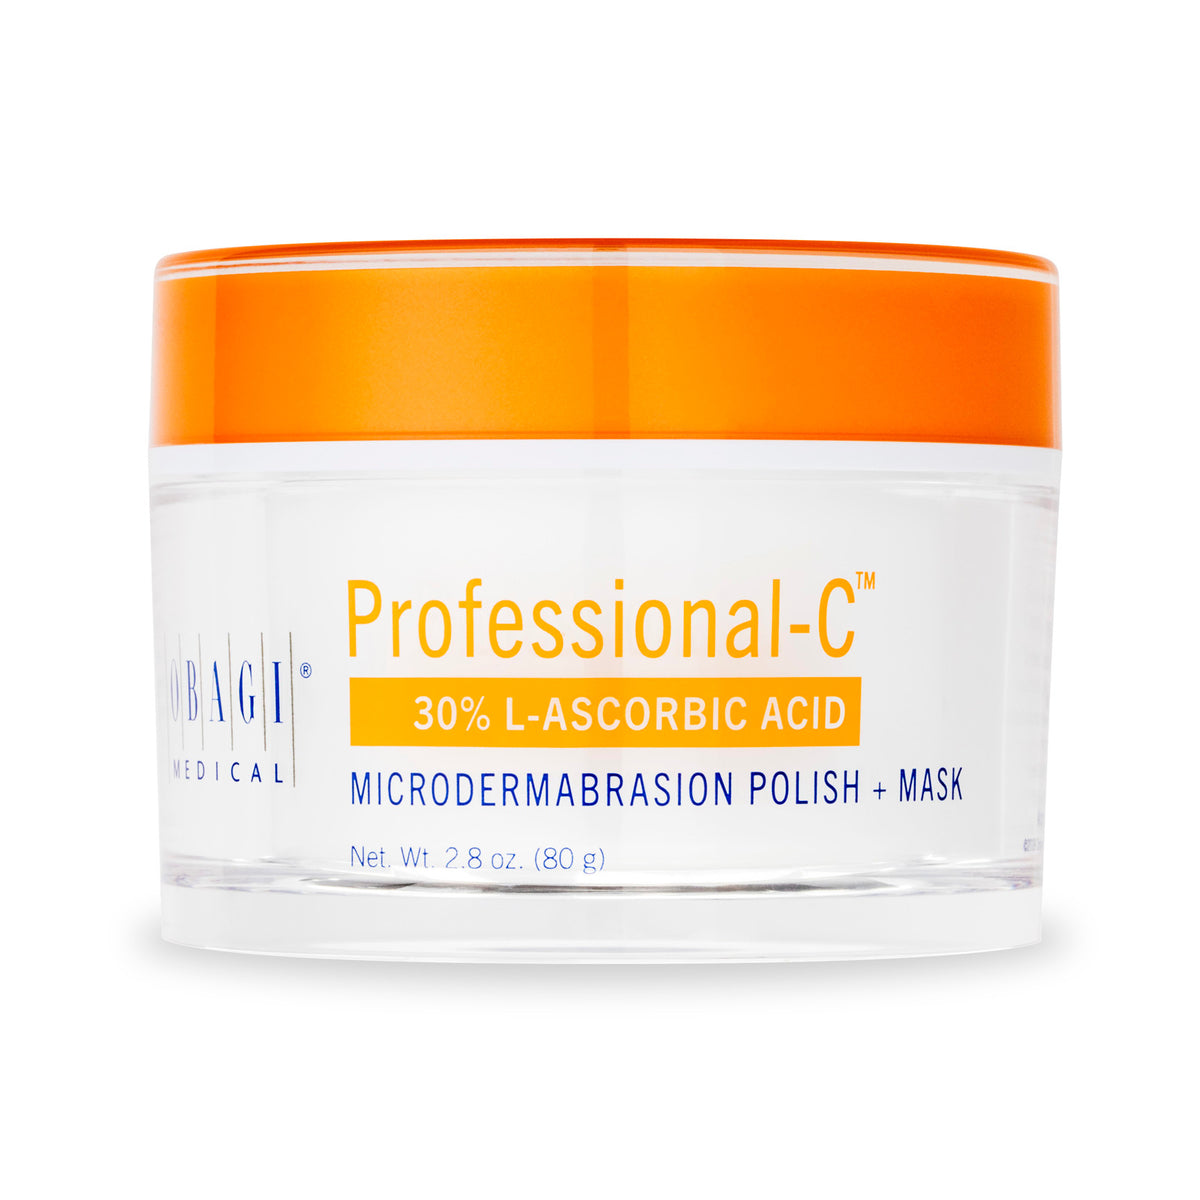 Obagi Professional-C Microdermabrasion پولش + ماسک (80 g)